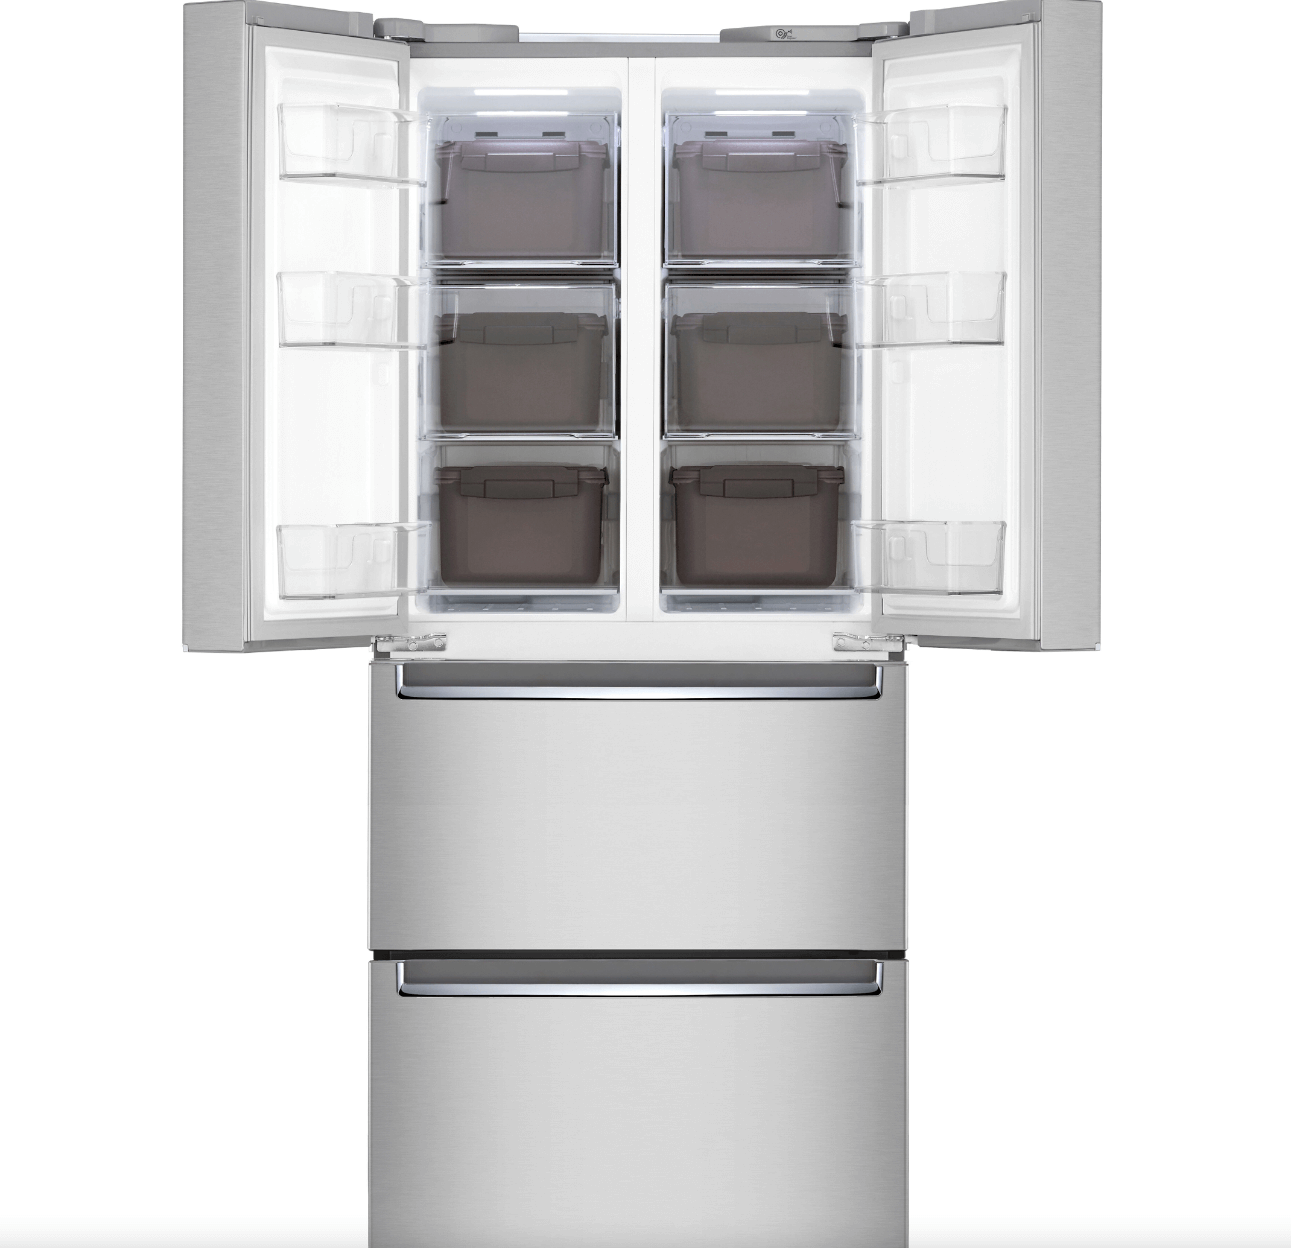 LG 30 Inch Kimchi Refrigerator in Noble Steel 14.3 Cu. Ft. (LRKNS1400V)